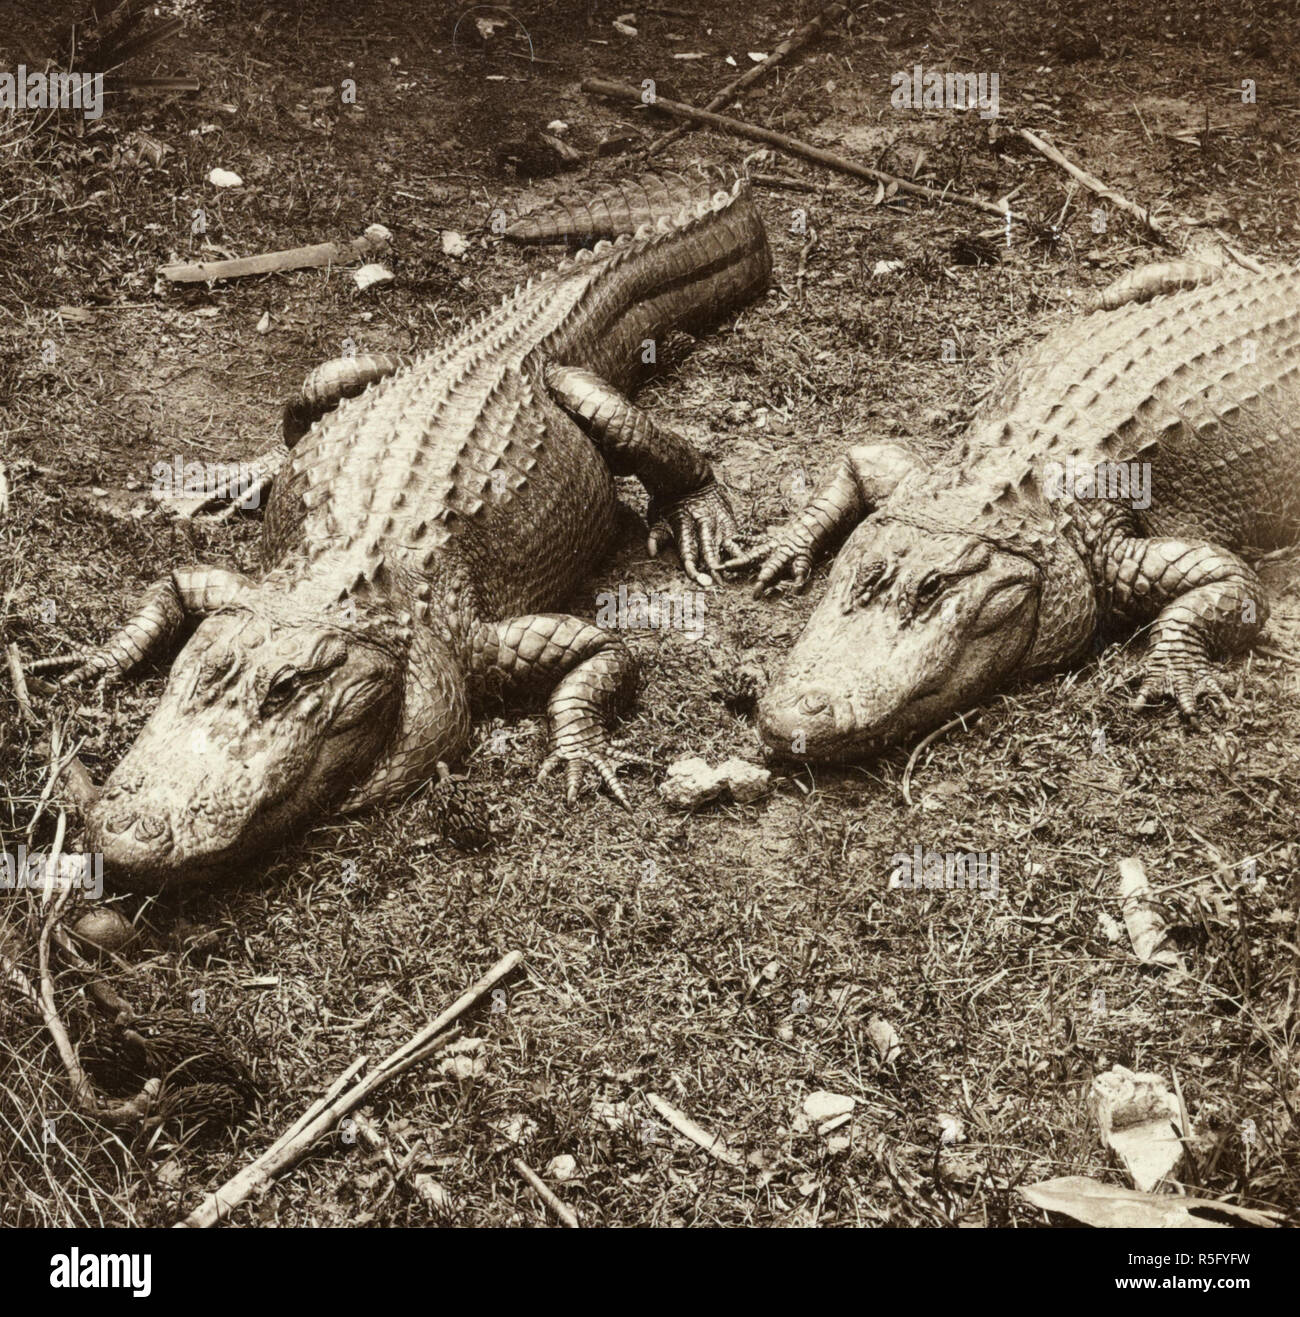 One of Florida's products - big alligators near Miami, U.S.A. 1906 Stock Photo